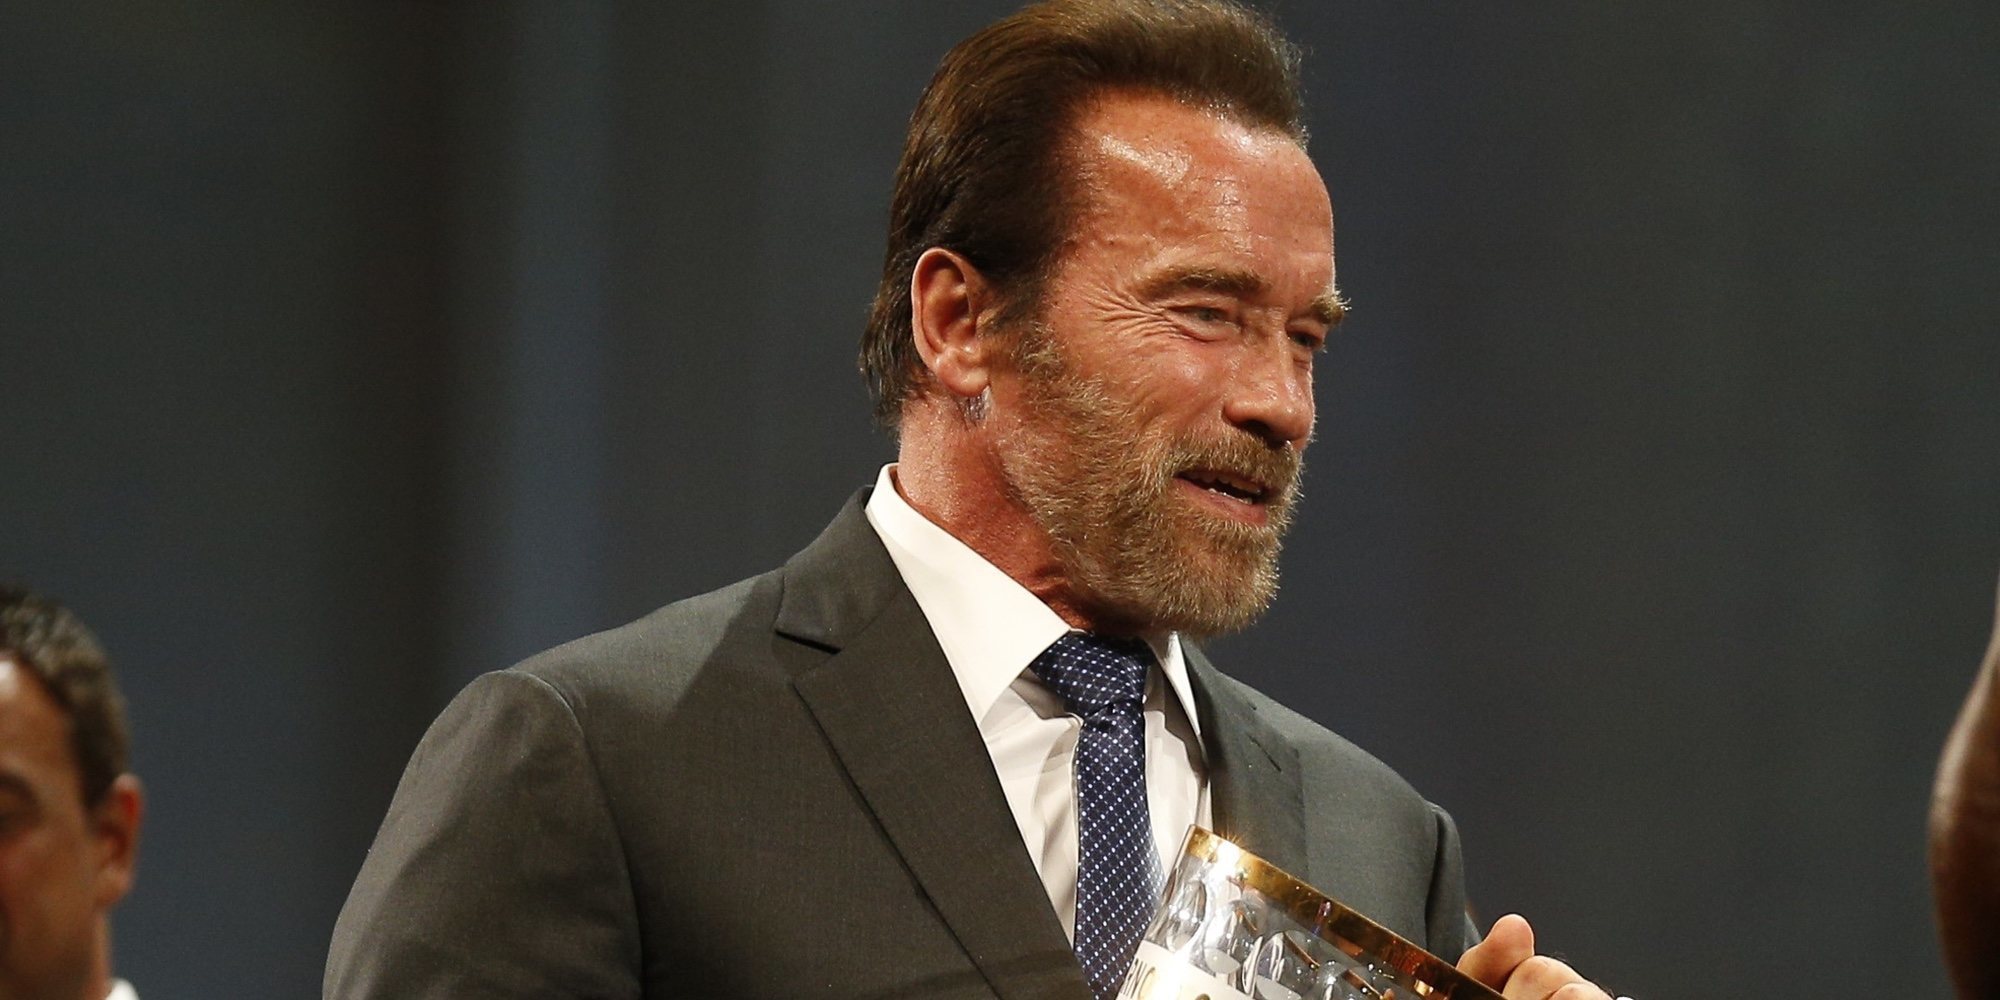 Arnold Schwarzenegger, muy optimista tras ser operado de urgencia a corazón abierto: "I'm back"